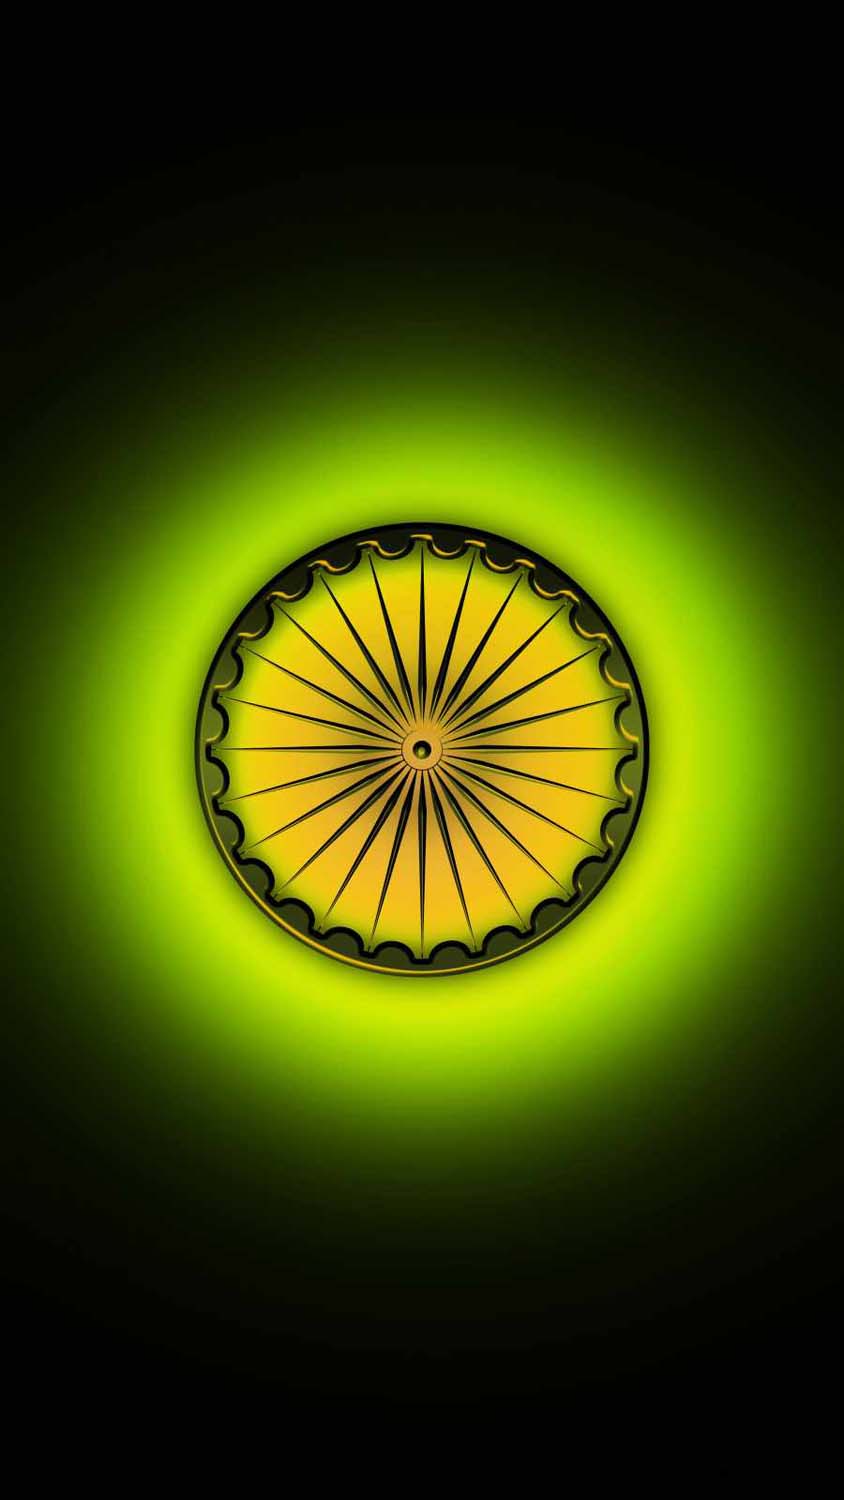 Indian flag wheel